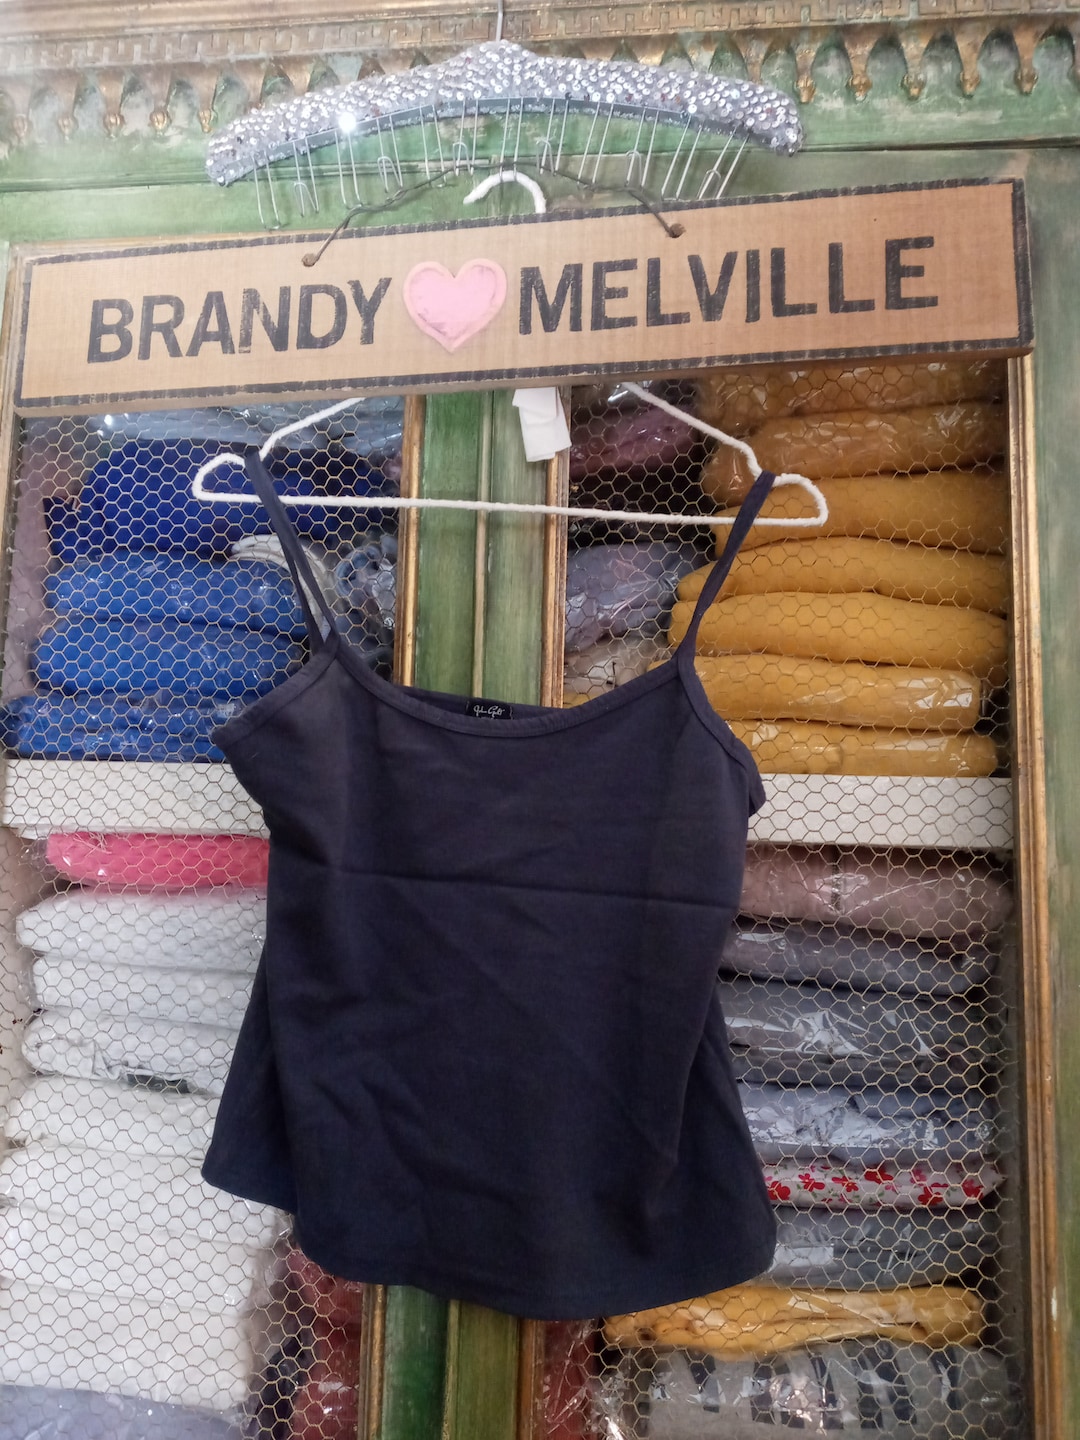 Brandy Melville Tank - $13 (48% Off Retail) - From Mya